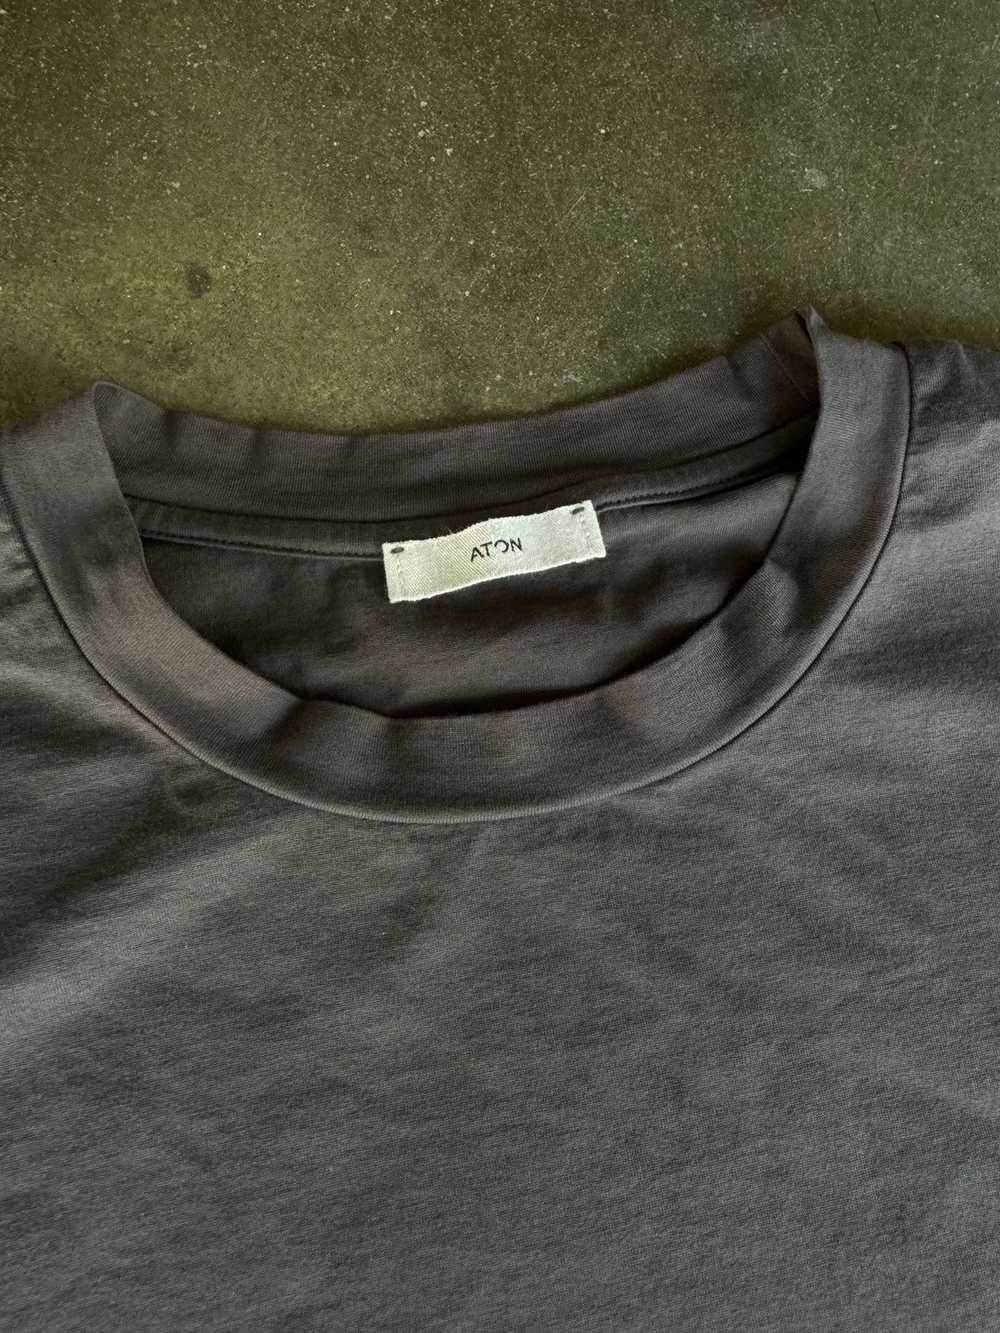 ATON Aton Single Stitched Tee Shirt Charcoal - image 3